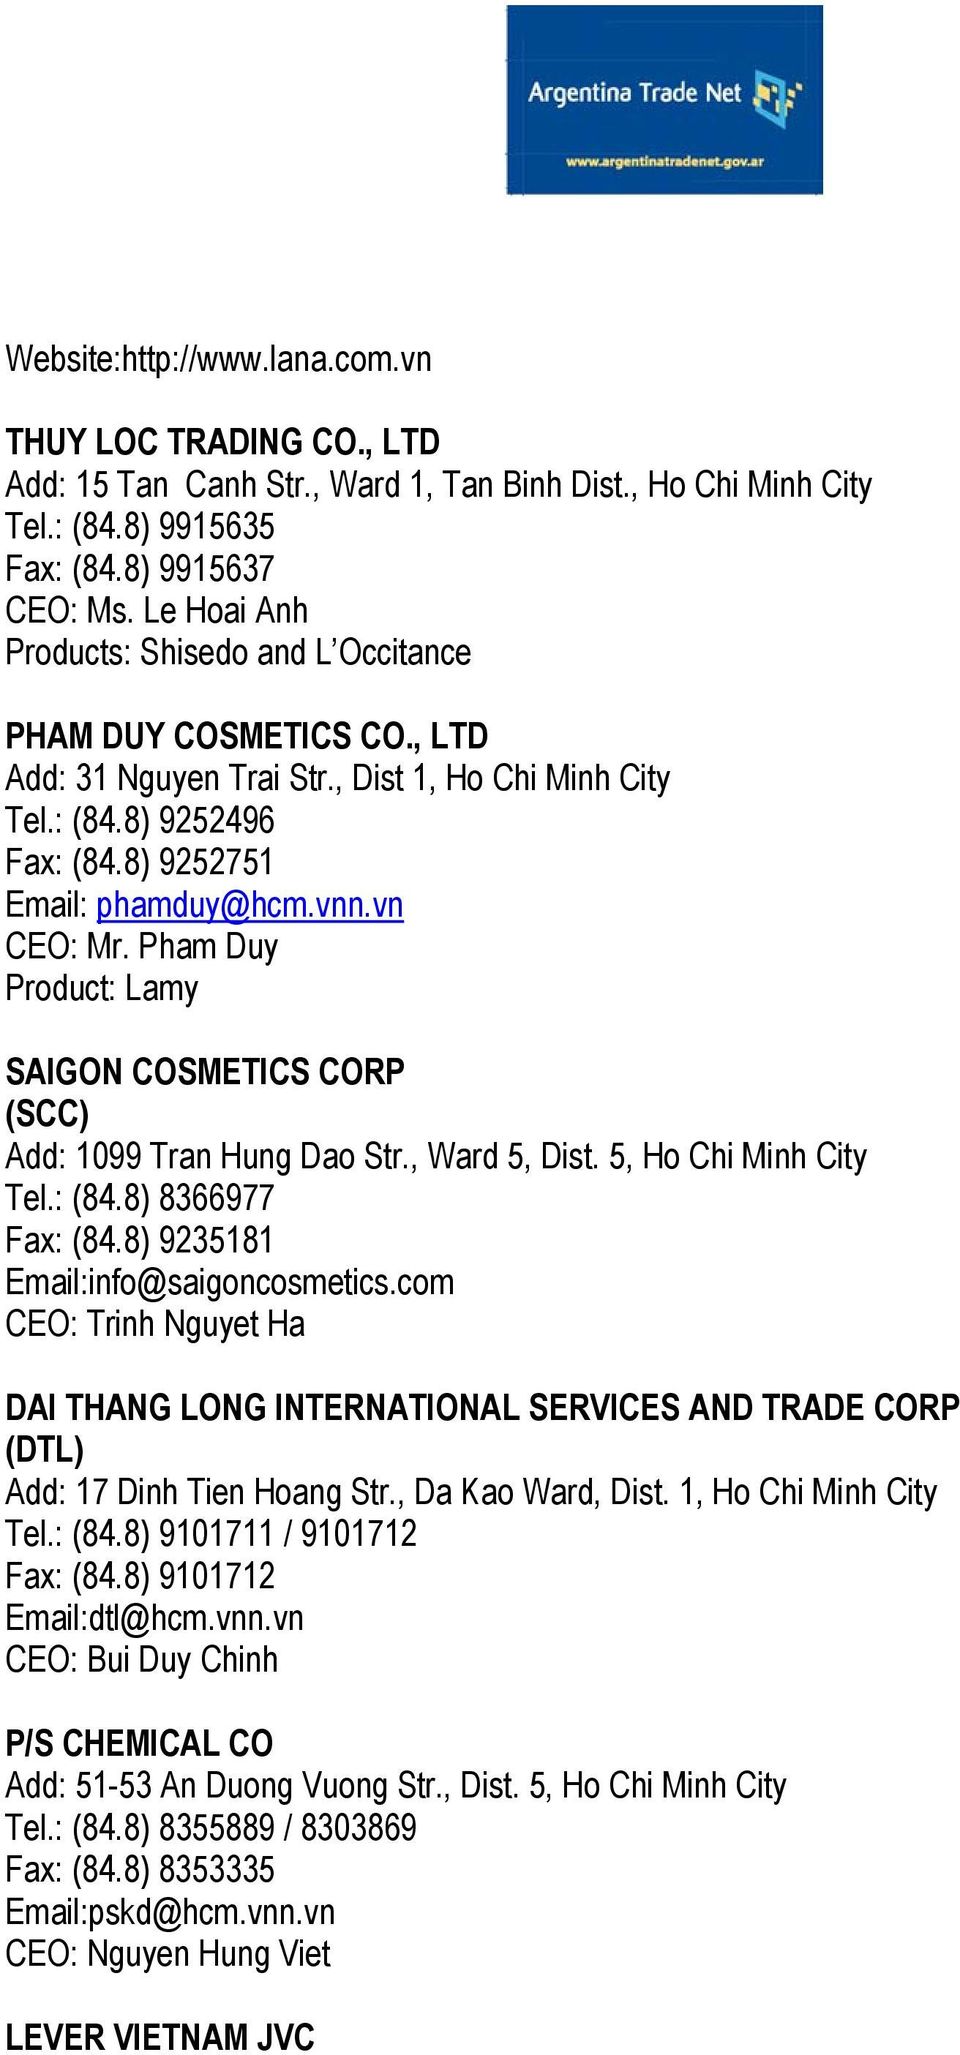 Pham Duy Product: Lamy SAIGON COSMETICS CORP (SCC) Add: 1099 Tran Hung Dao Str., Ward 5, Dist. 5, Ho Chi Minh City Tel.: (84.8) 8366977 Fax: (84.8) 9235181 Email:info@saigoncosmetics.